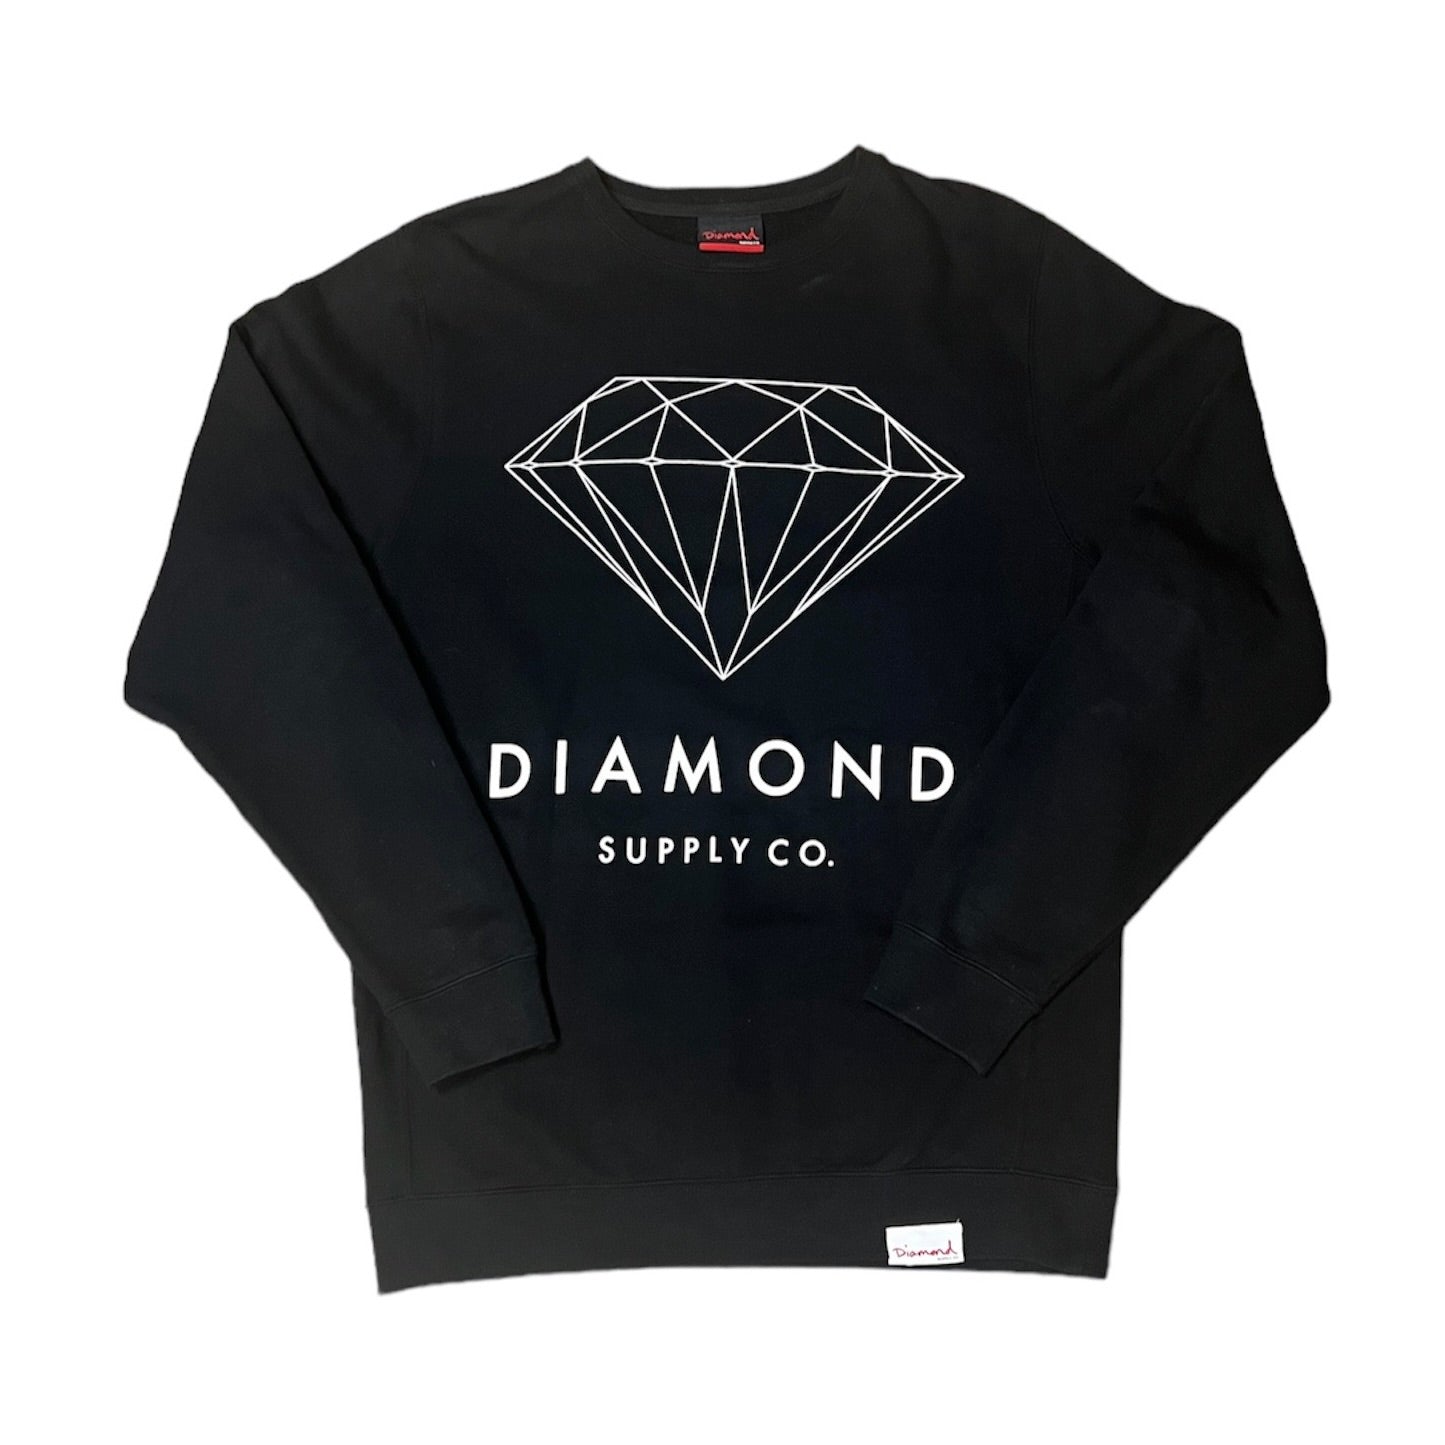 Diamond Supply Co. Black Sweatshirt